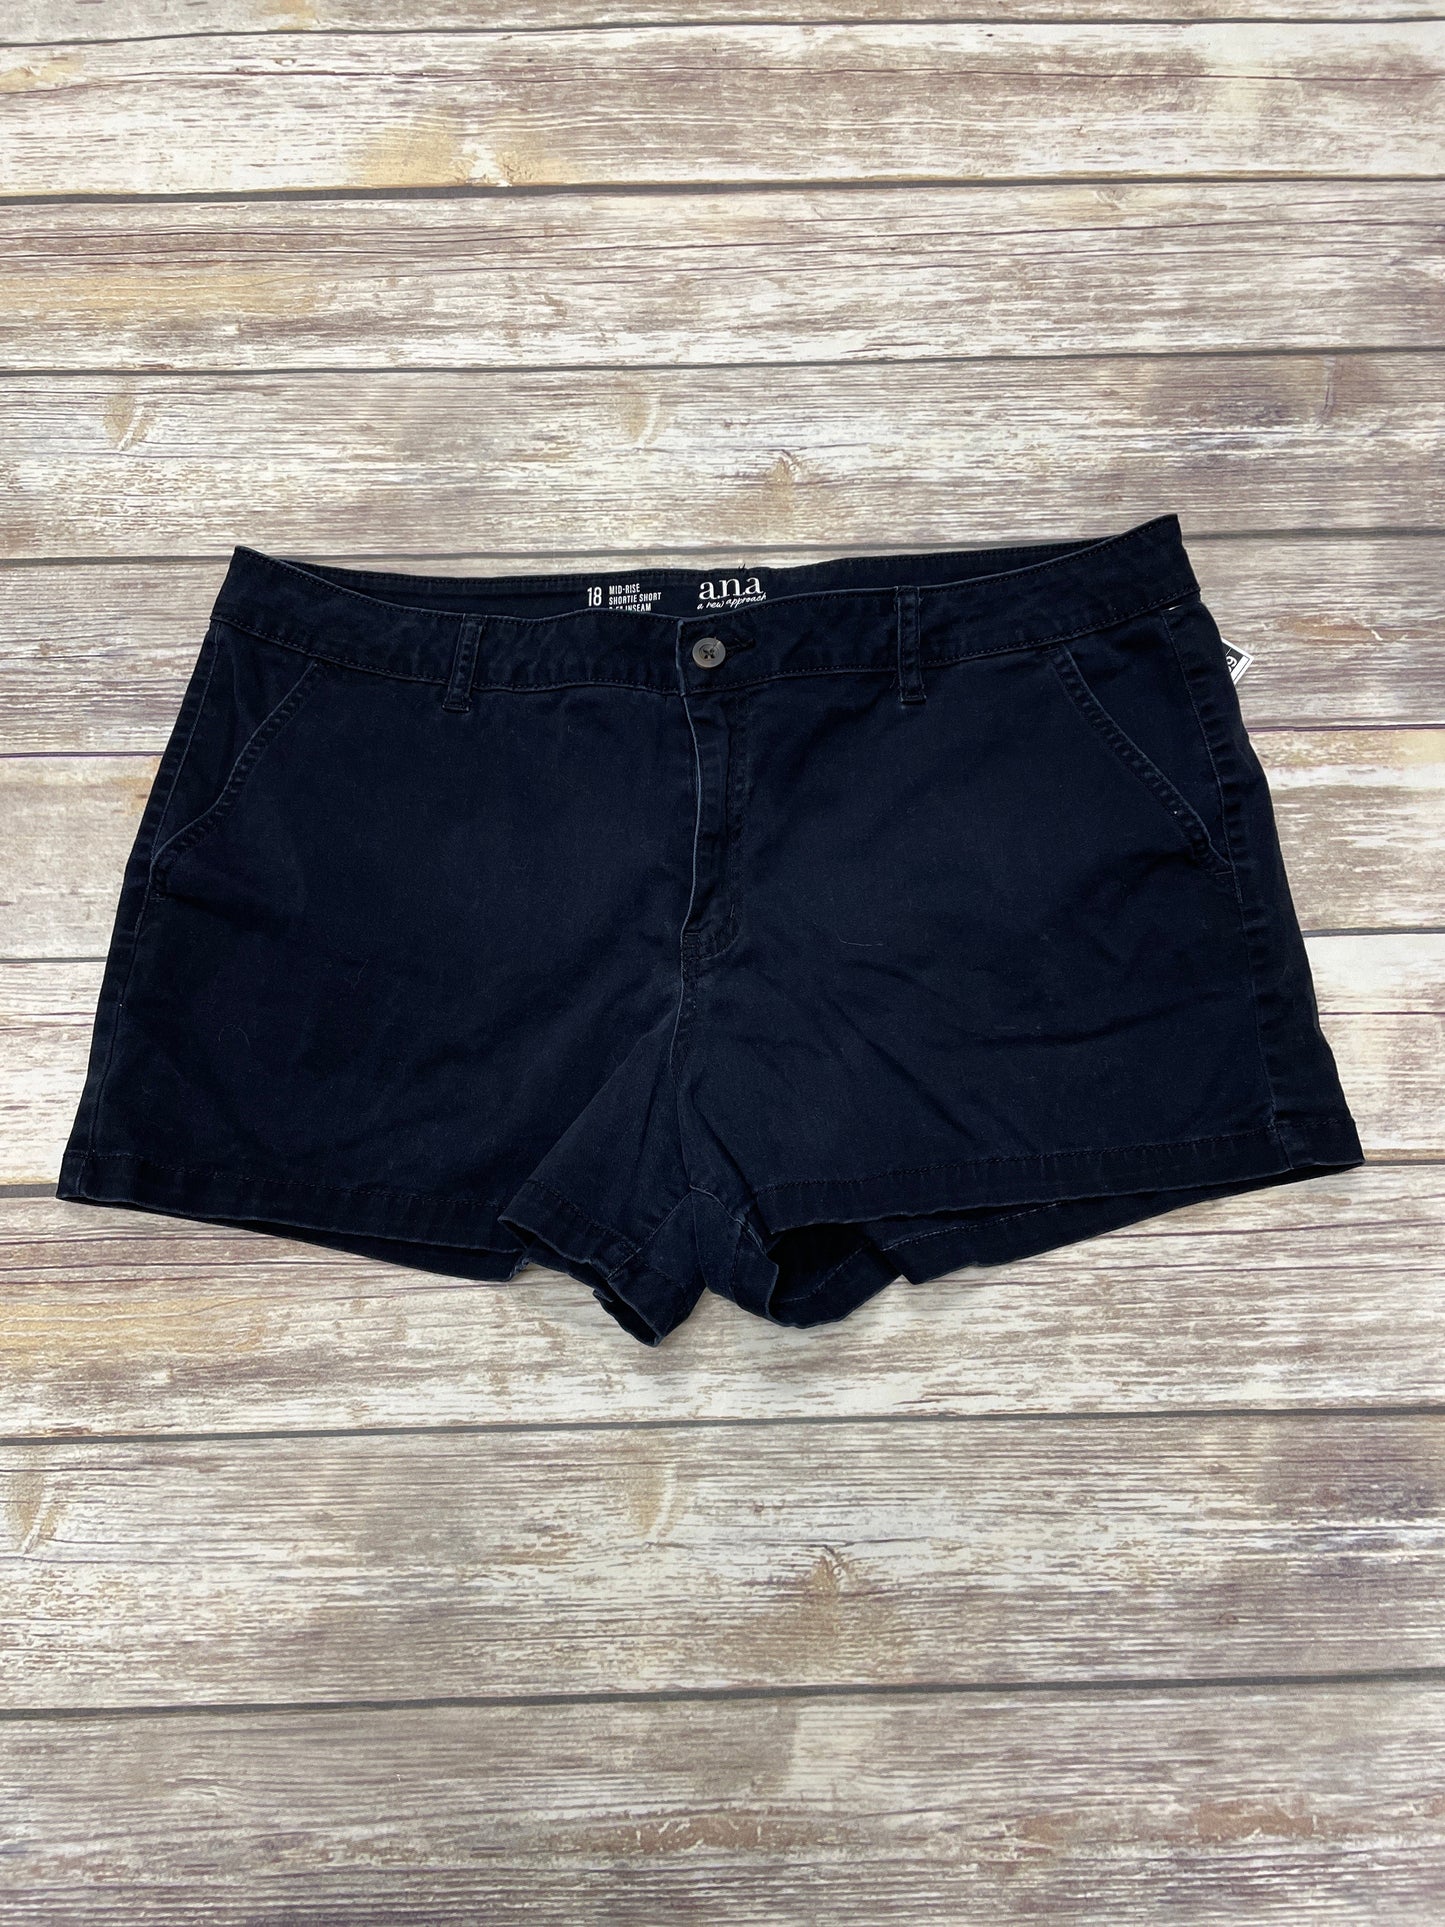 Black Shorts Ana, Size 18